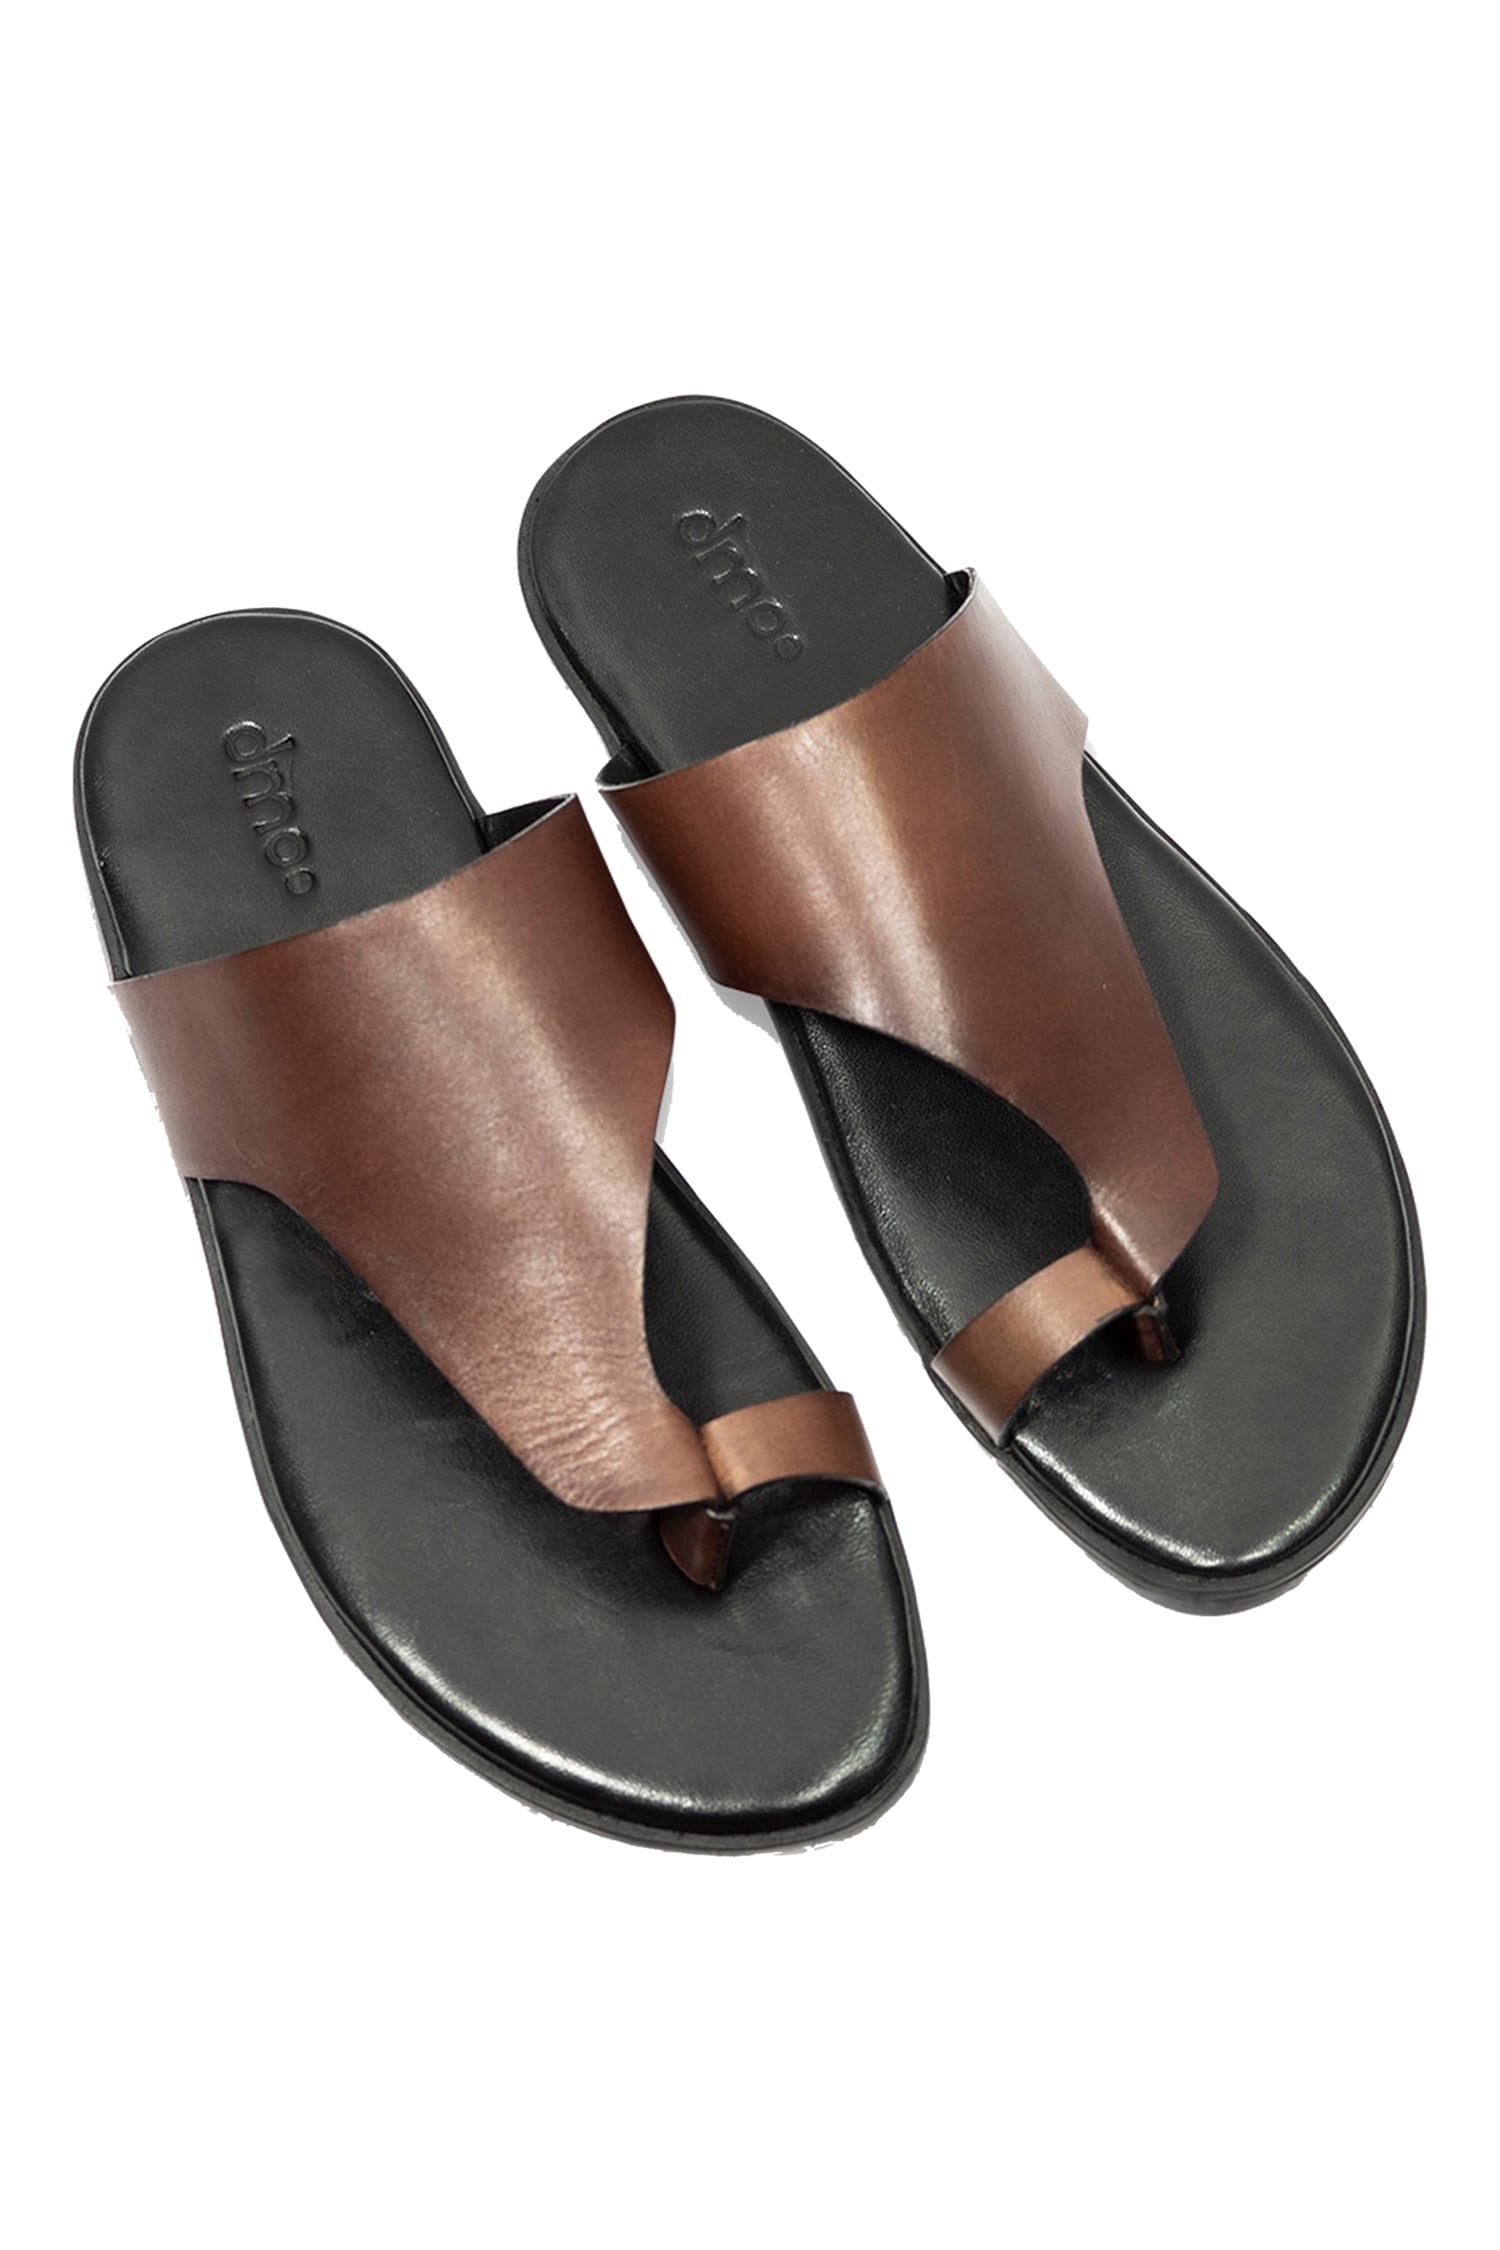 Dmodot Black Leather Strap Sandals